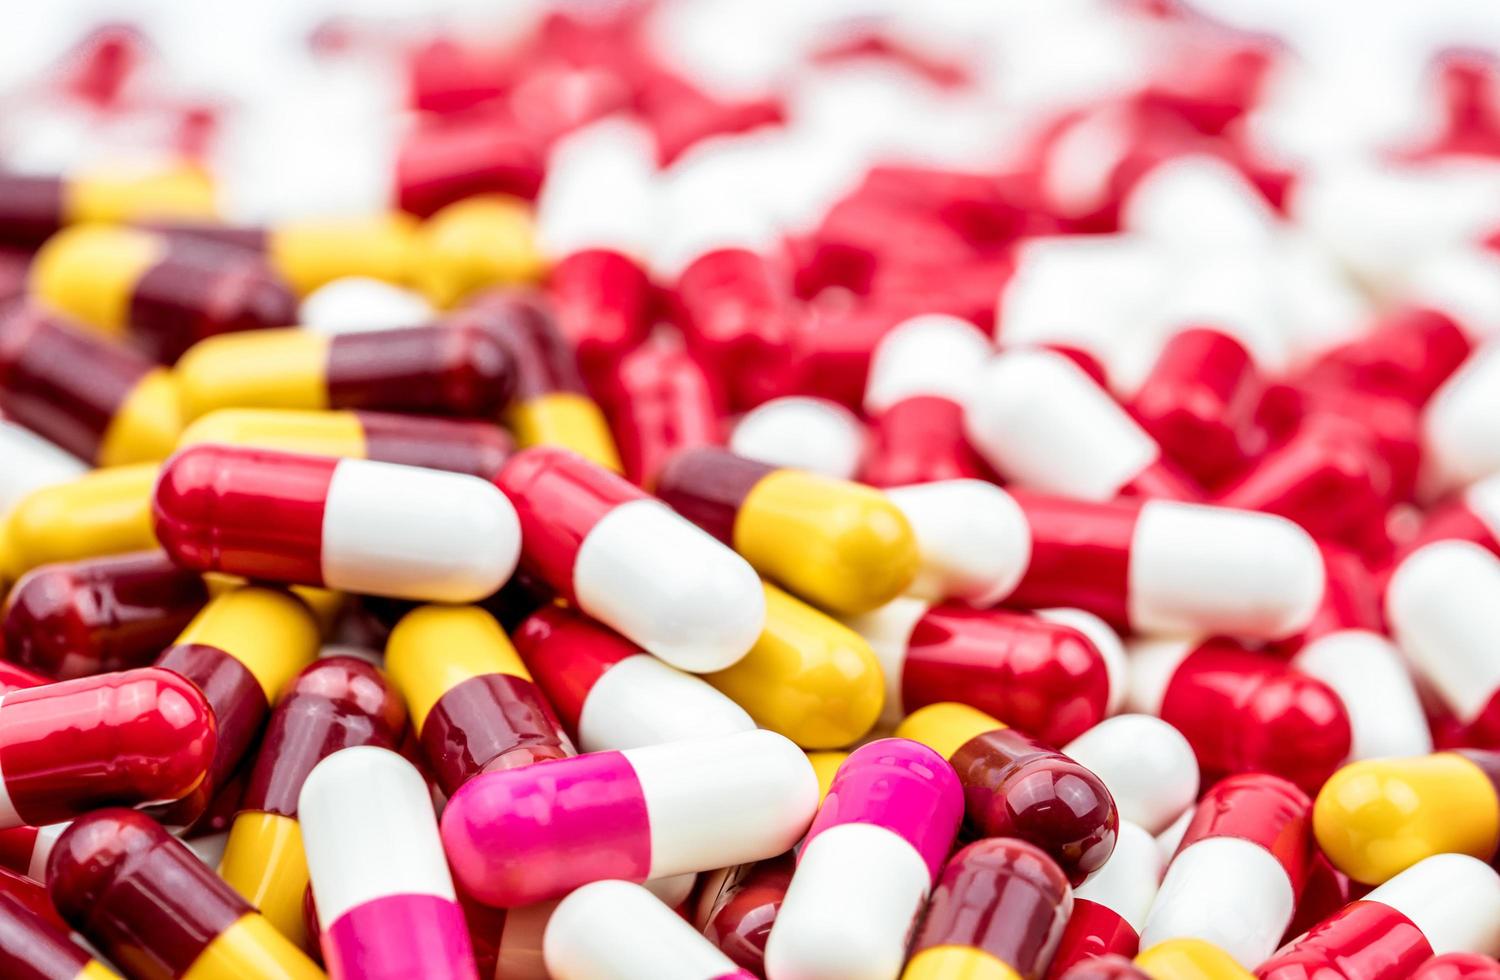 Pile of colorful antibiotic capsule pills. Antibiotic drug resistance concept. Prescription drugs. Pharmaceutical industry. photo